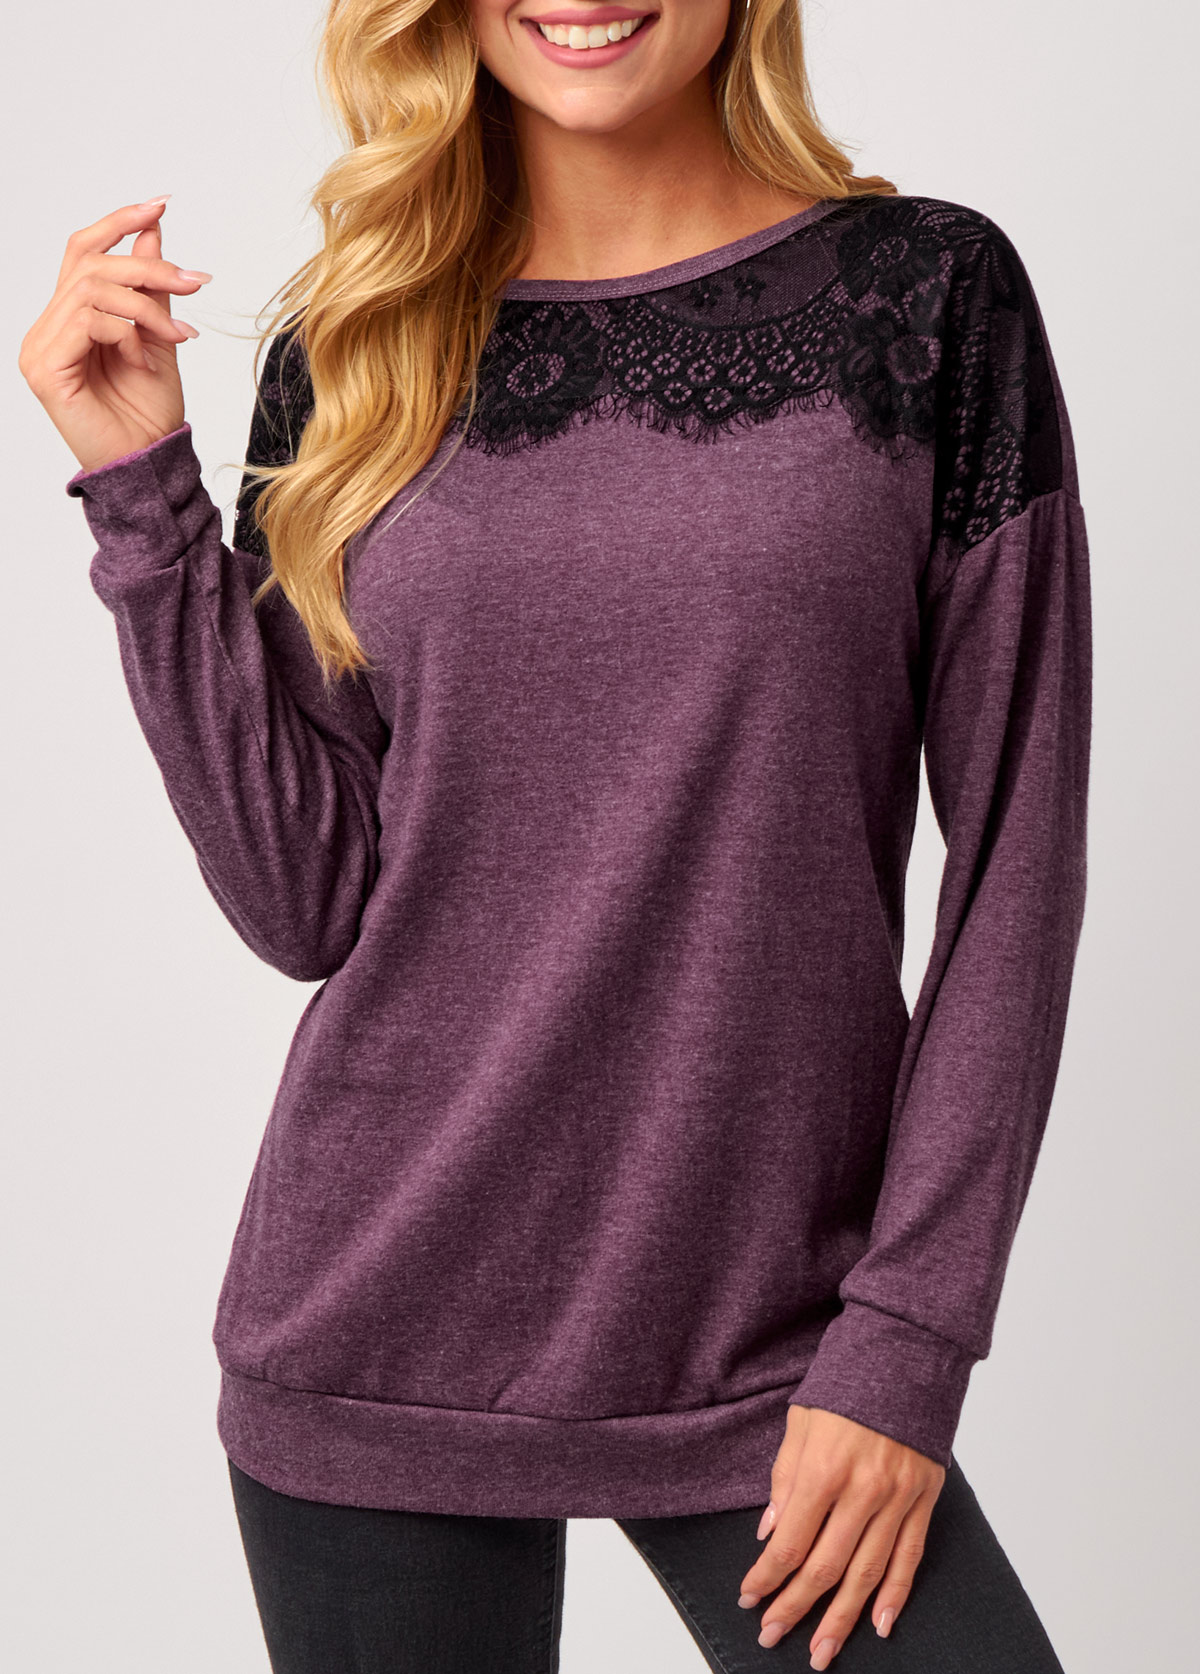 Lace Panel Long Sleeve Purple T Shirt